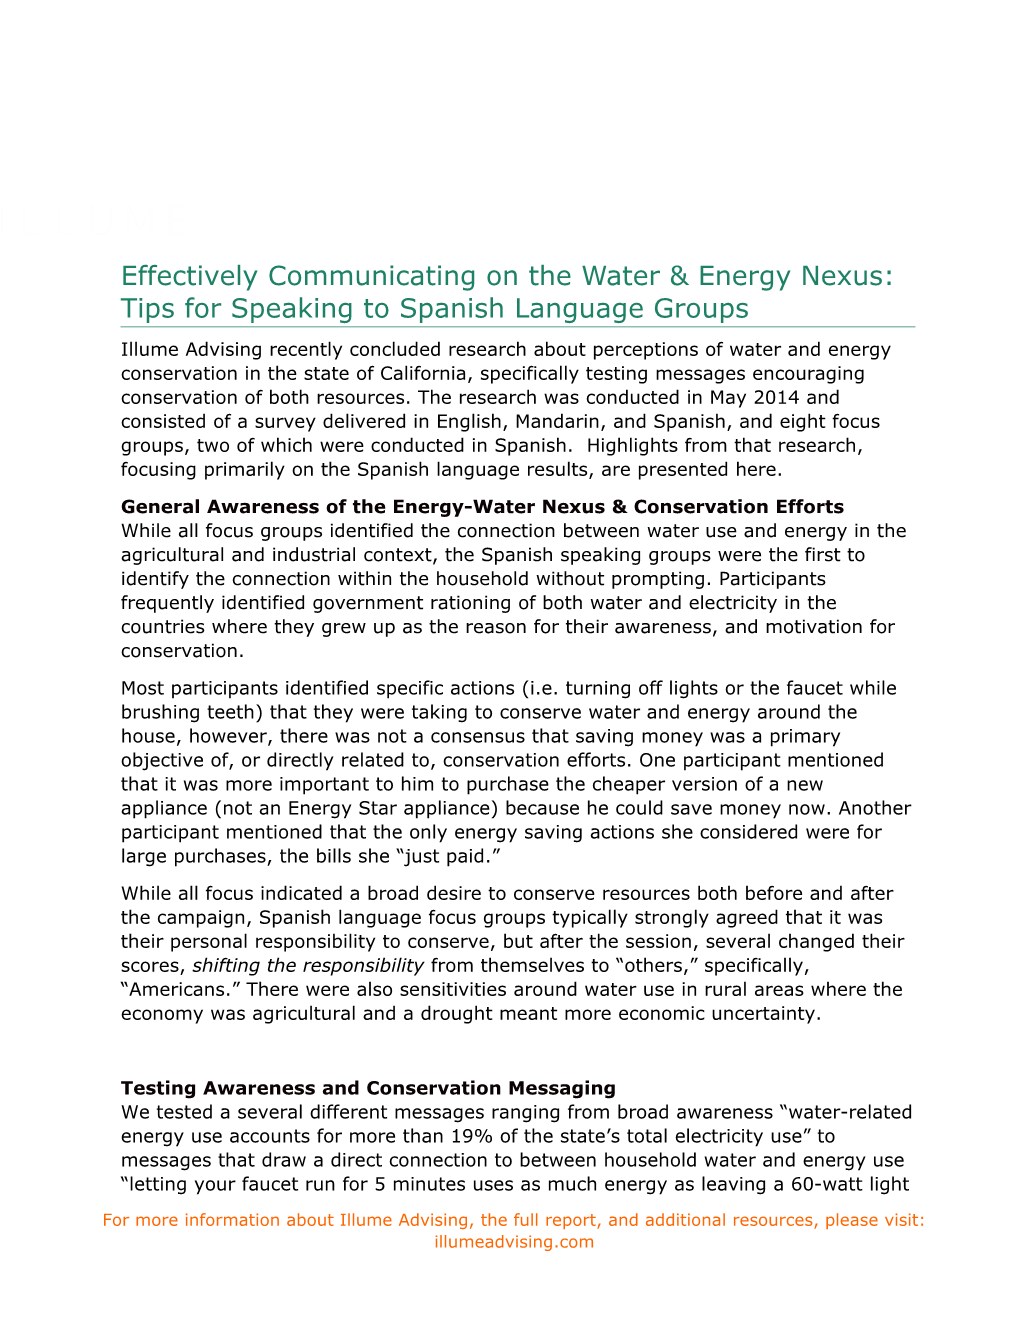 General Awareness of the Energy-Water Nexus & Conservation Efforts